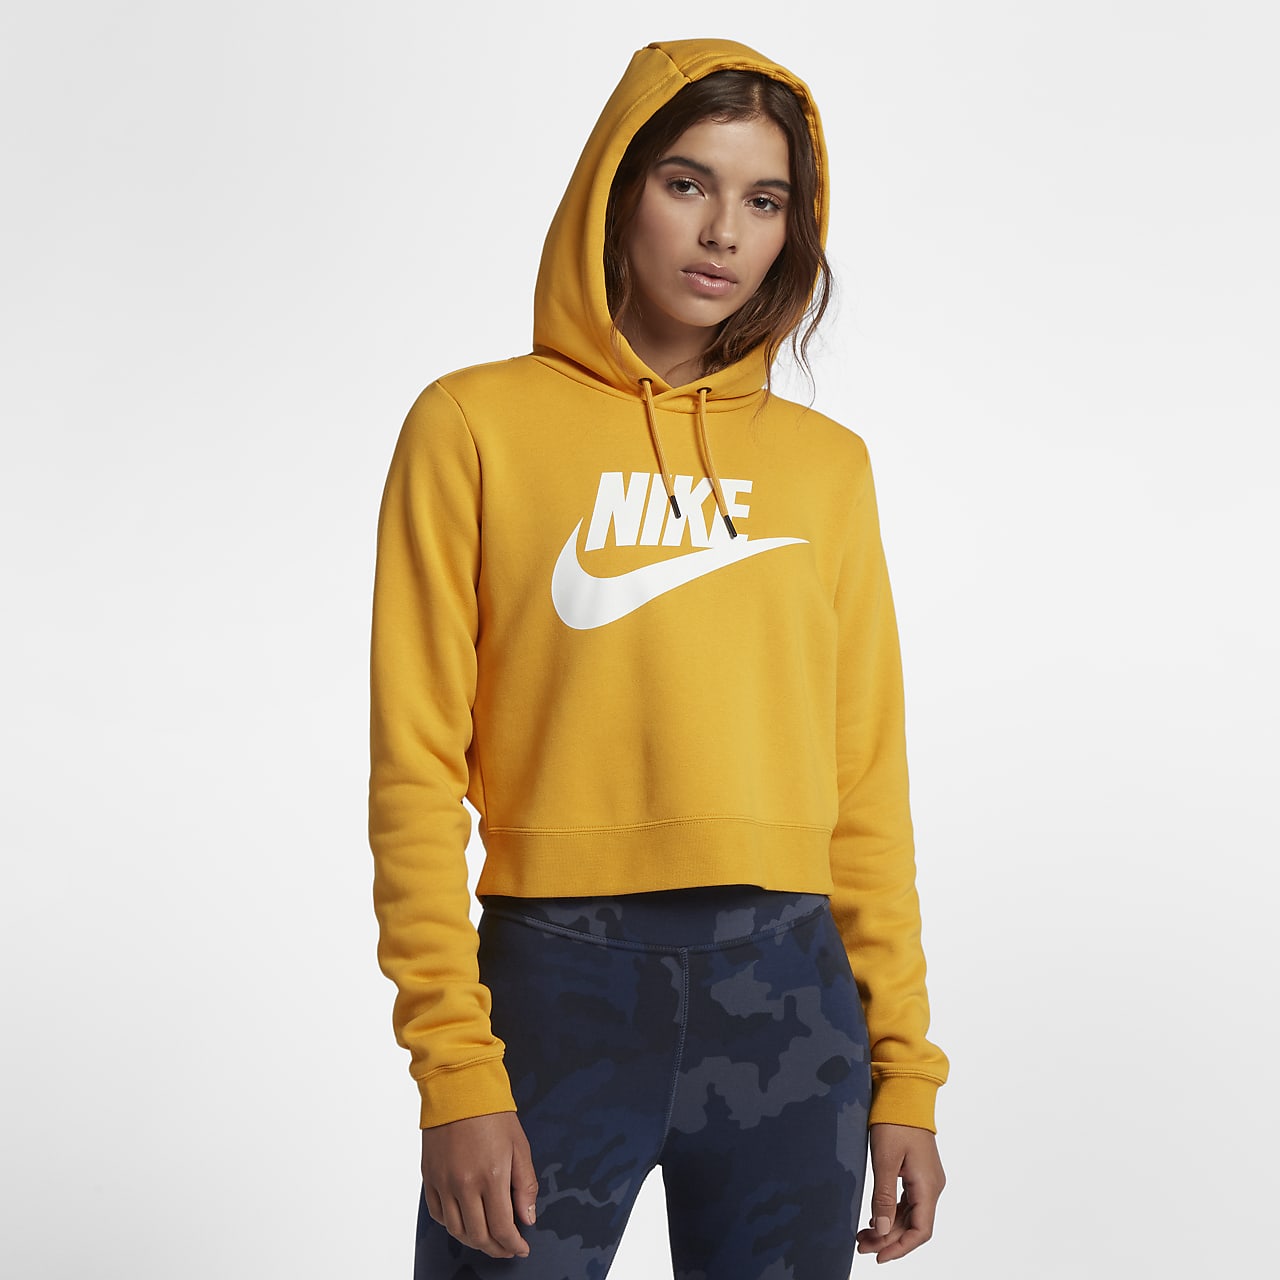 Nike Hoodie Yellow